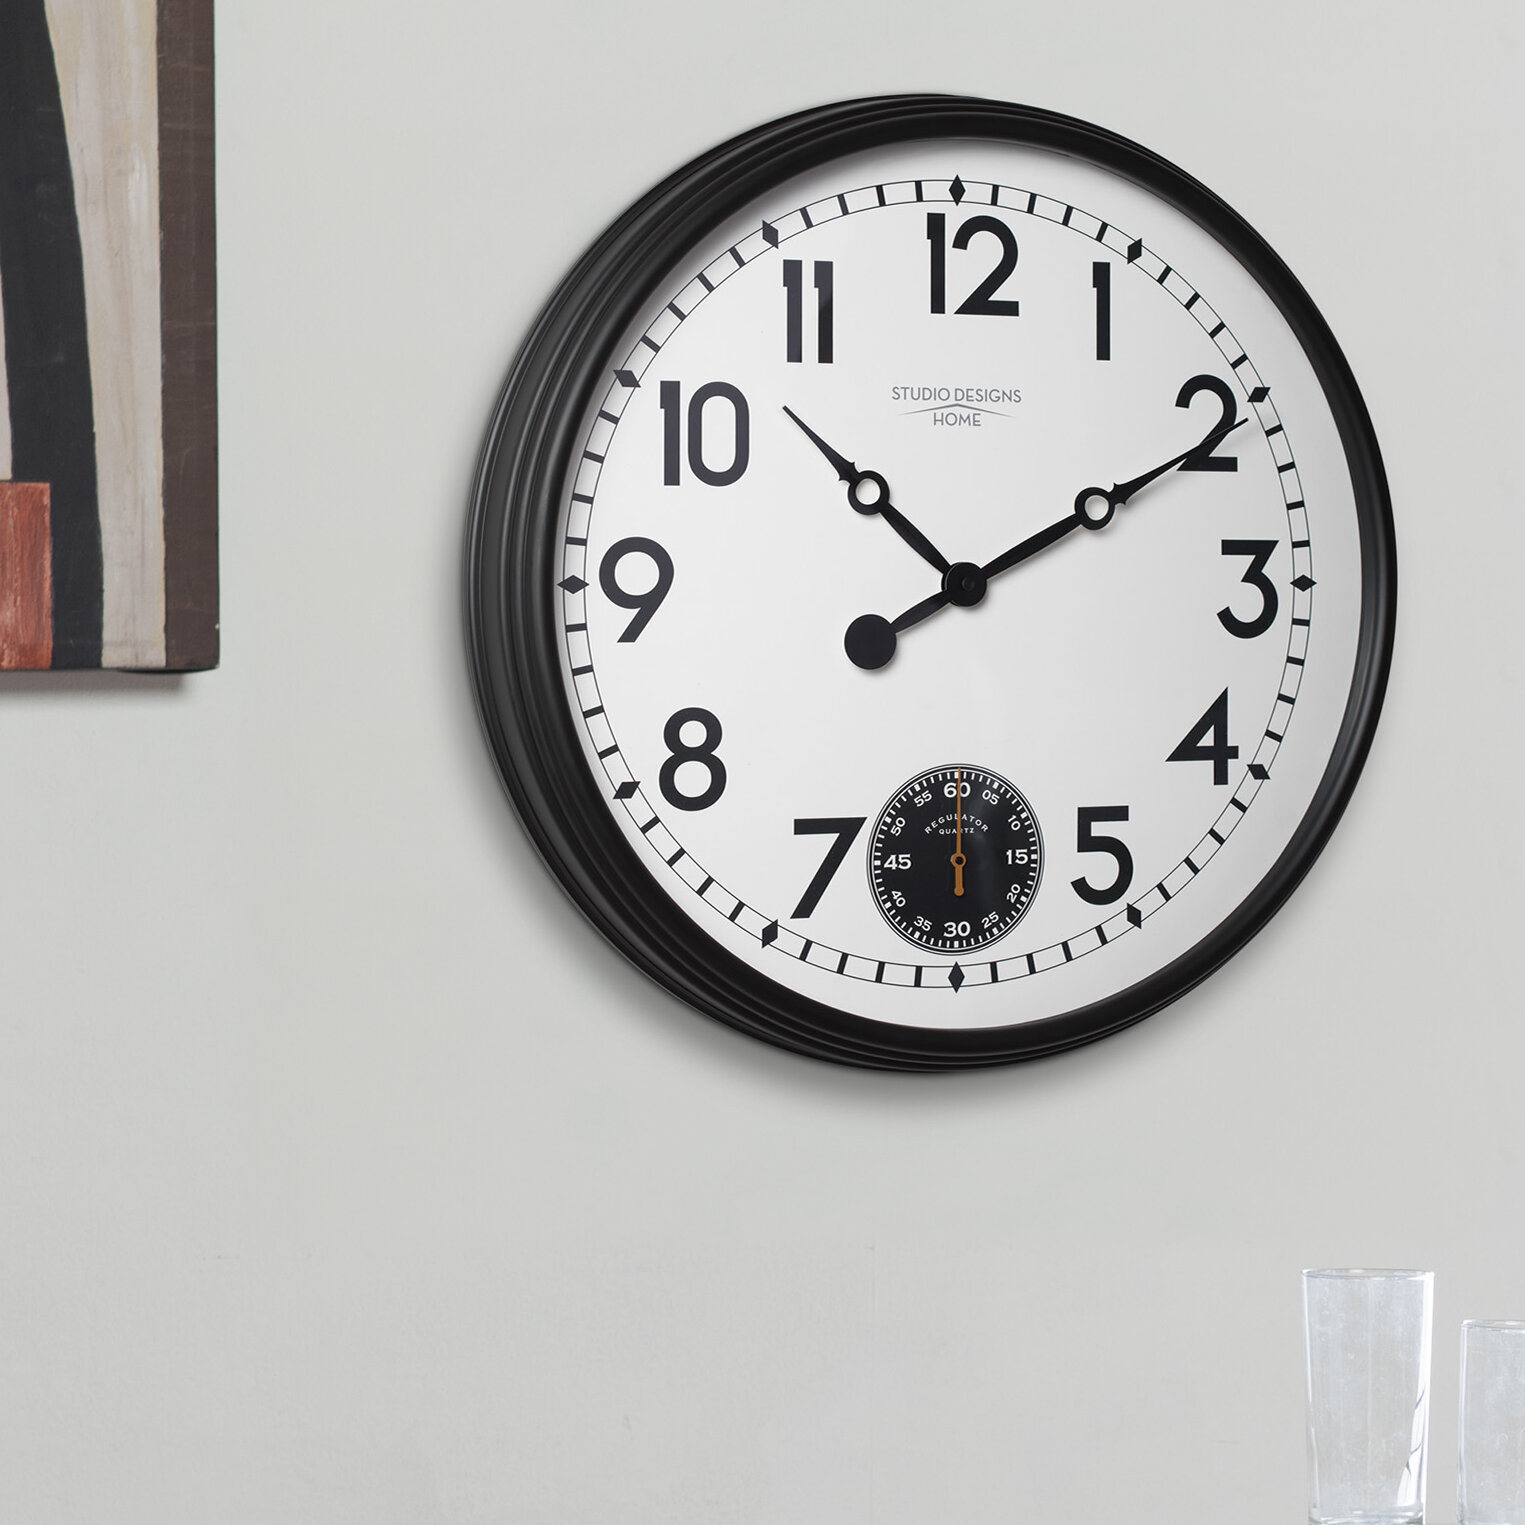 Studio Designs HOME Terrace Wall Clock & Reviews | Wayfair